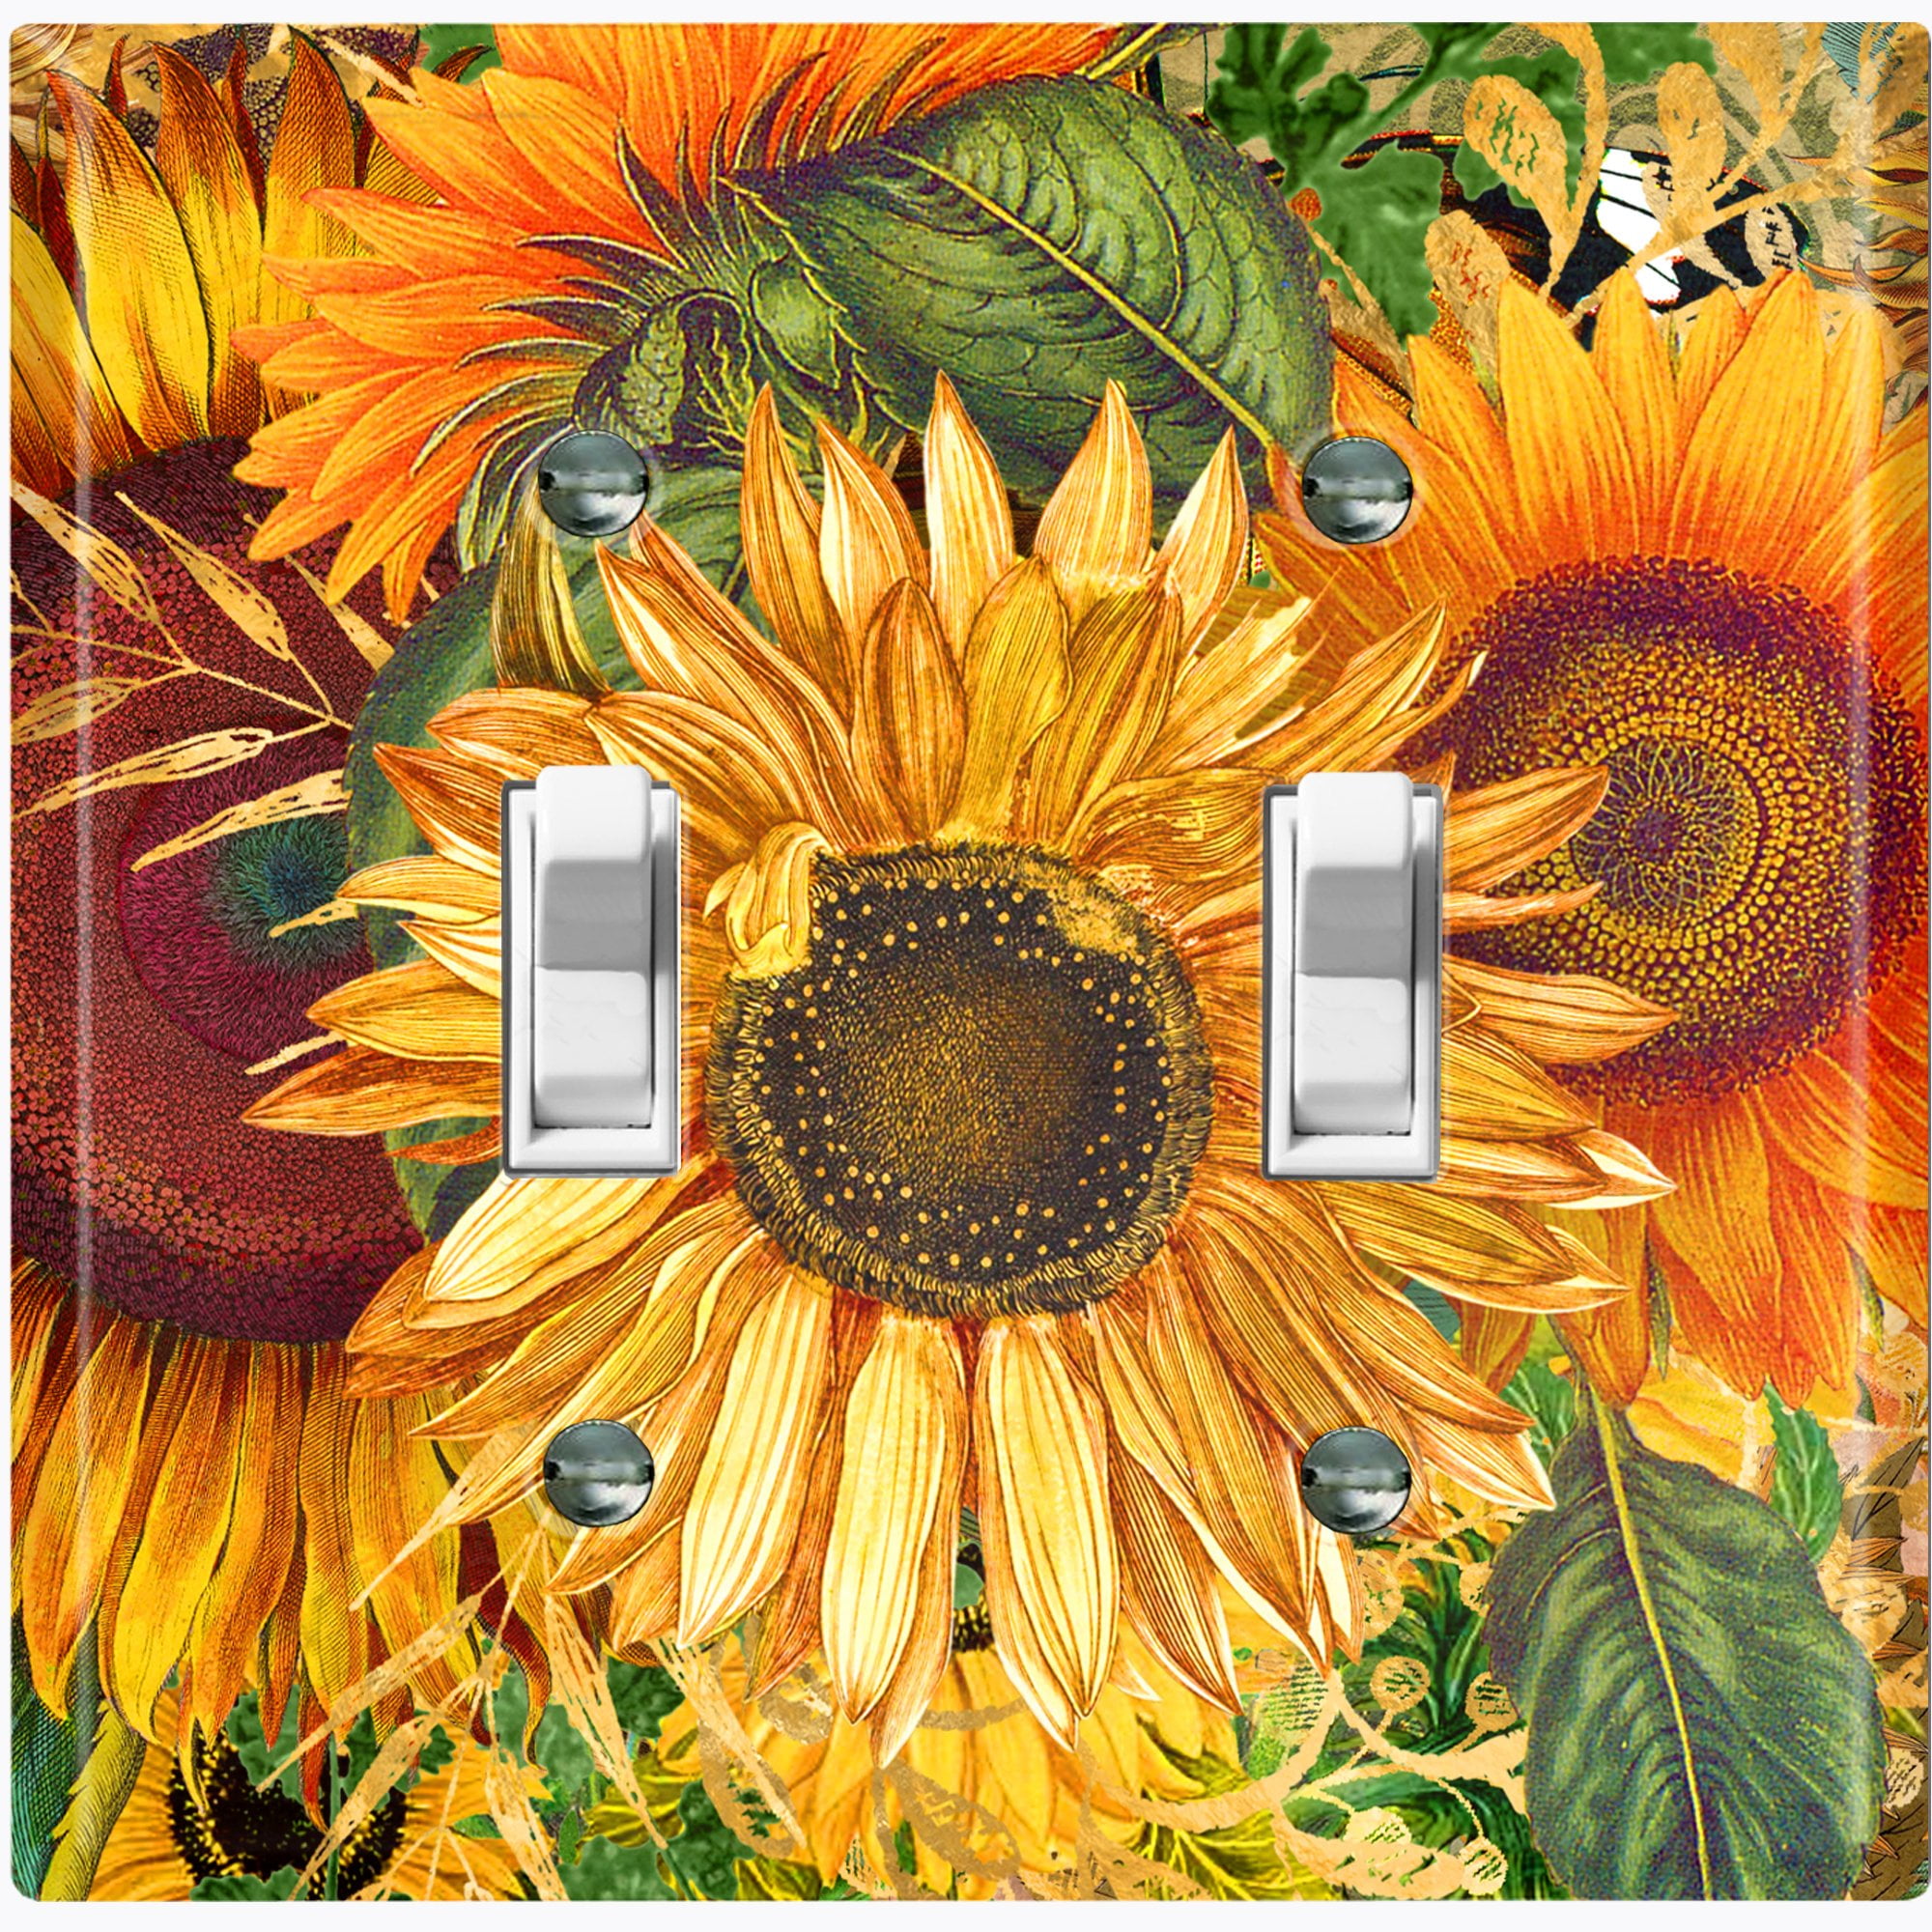 Sunflower Field Sunset Bedroom Decor Home Decor,Knob, Light Switch Cover 